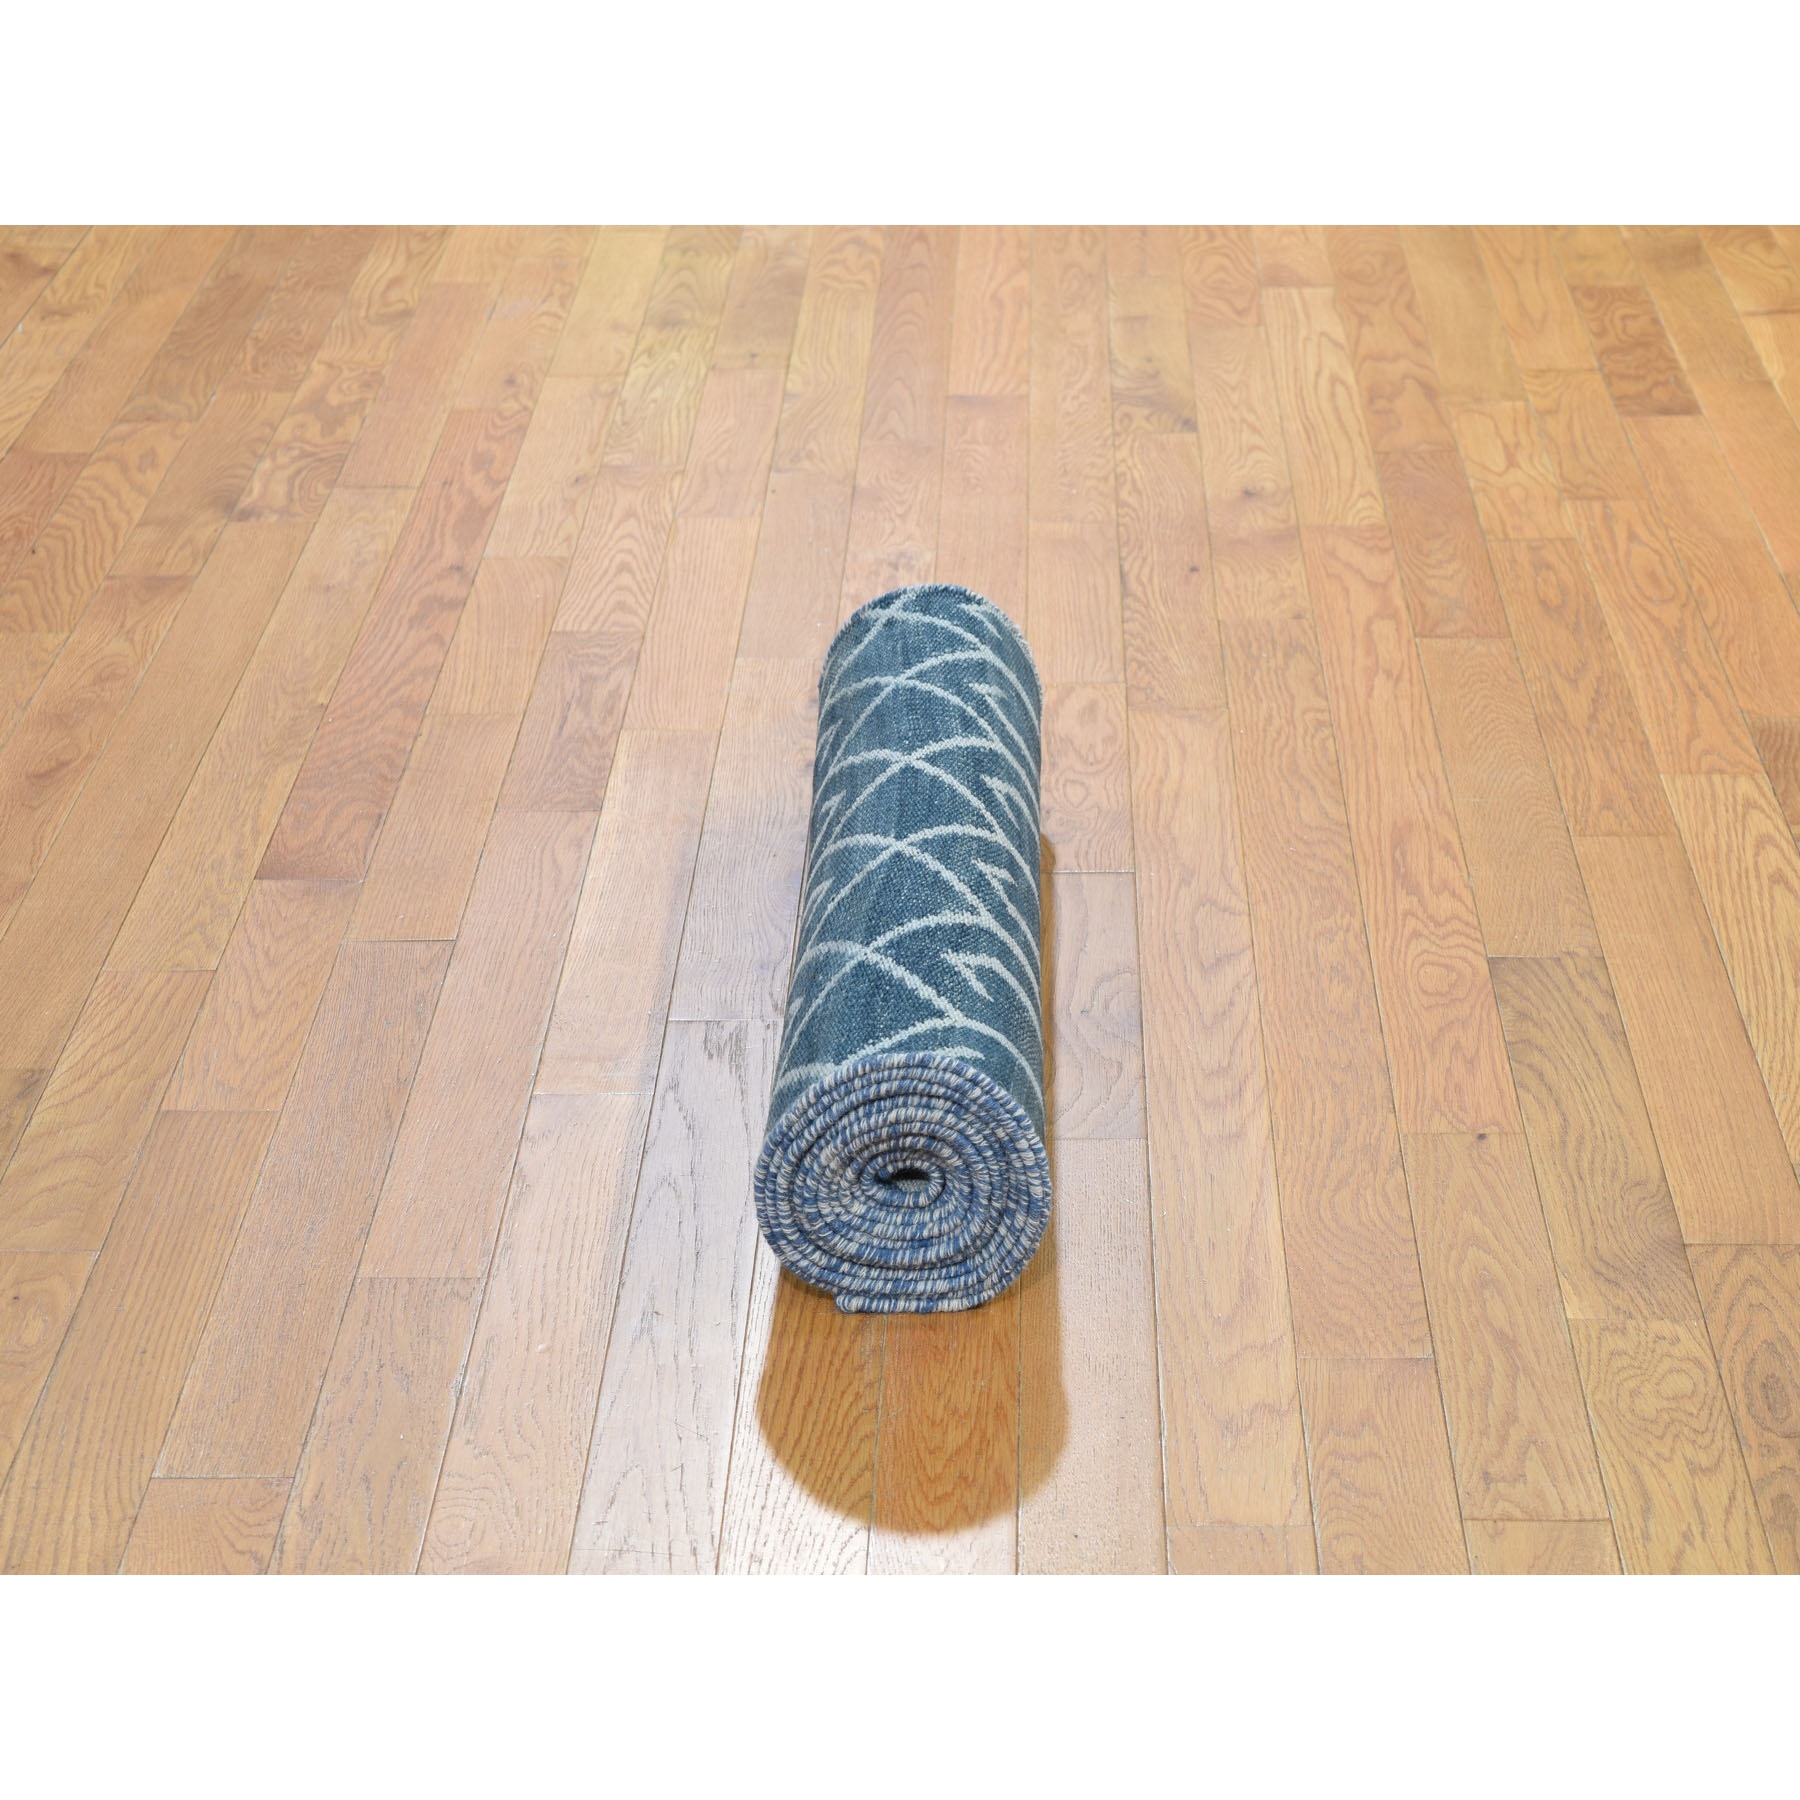 2'6"x11'10" Hand Woven Reversible Kilim Flat Weave Runner Oriental Rug 